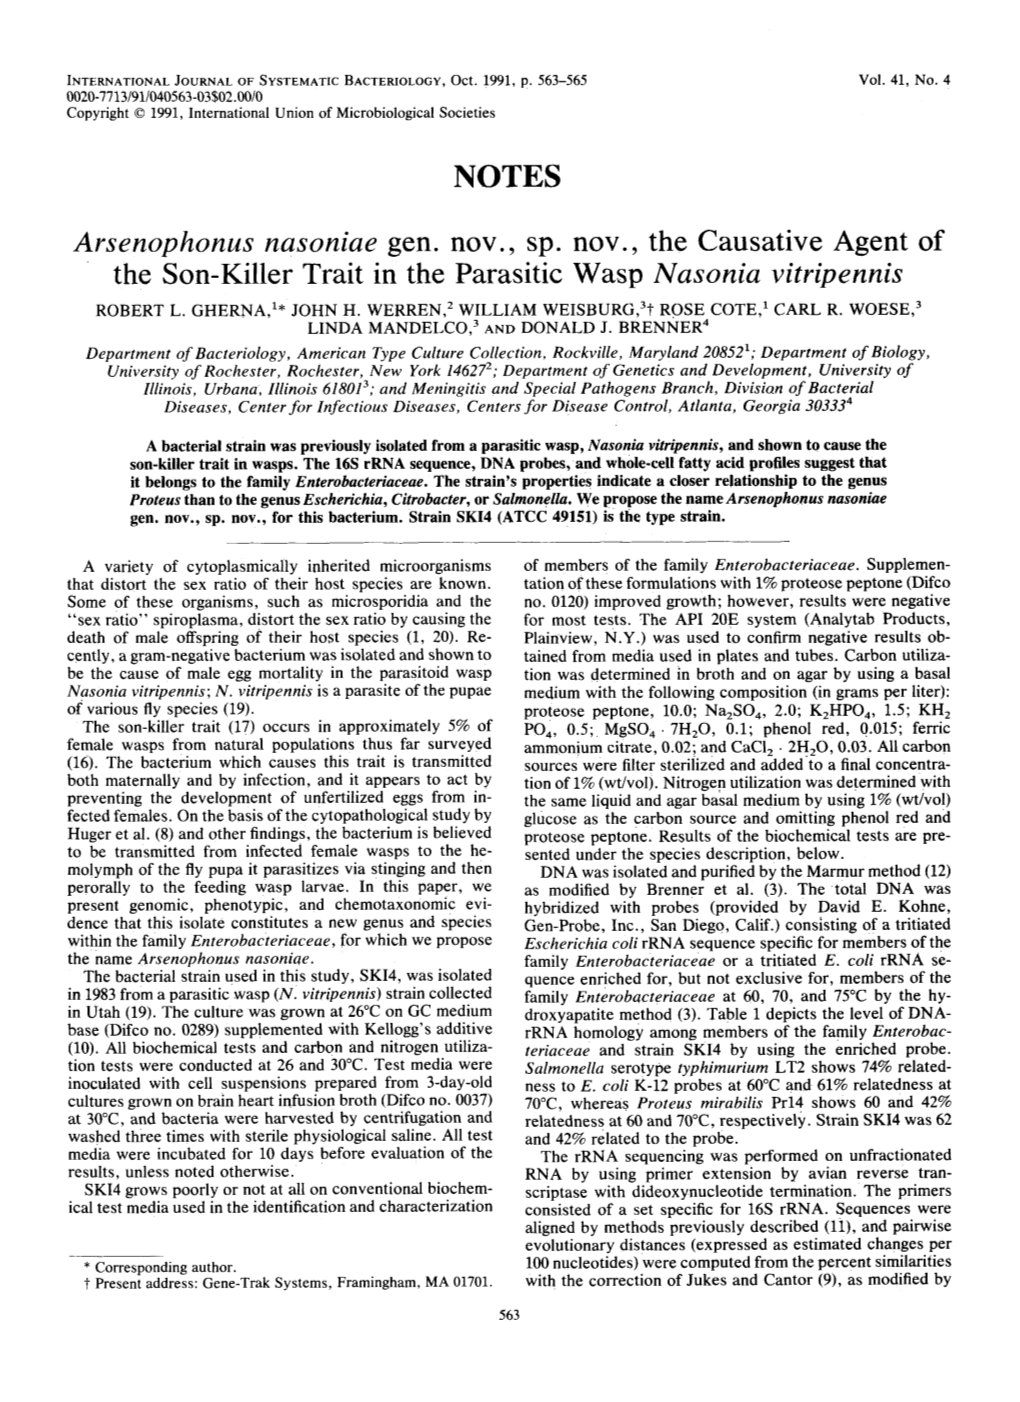 Arsenophonus Nasoniae Gen. Nov., Sp. Nov. the Causative Agent of the Son-Killer Trait in the Parasitic Wasp Nasonia Vitripennis ROBERT L